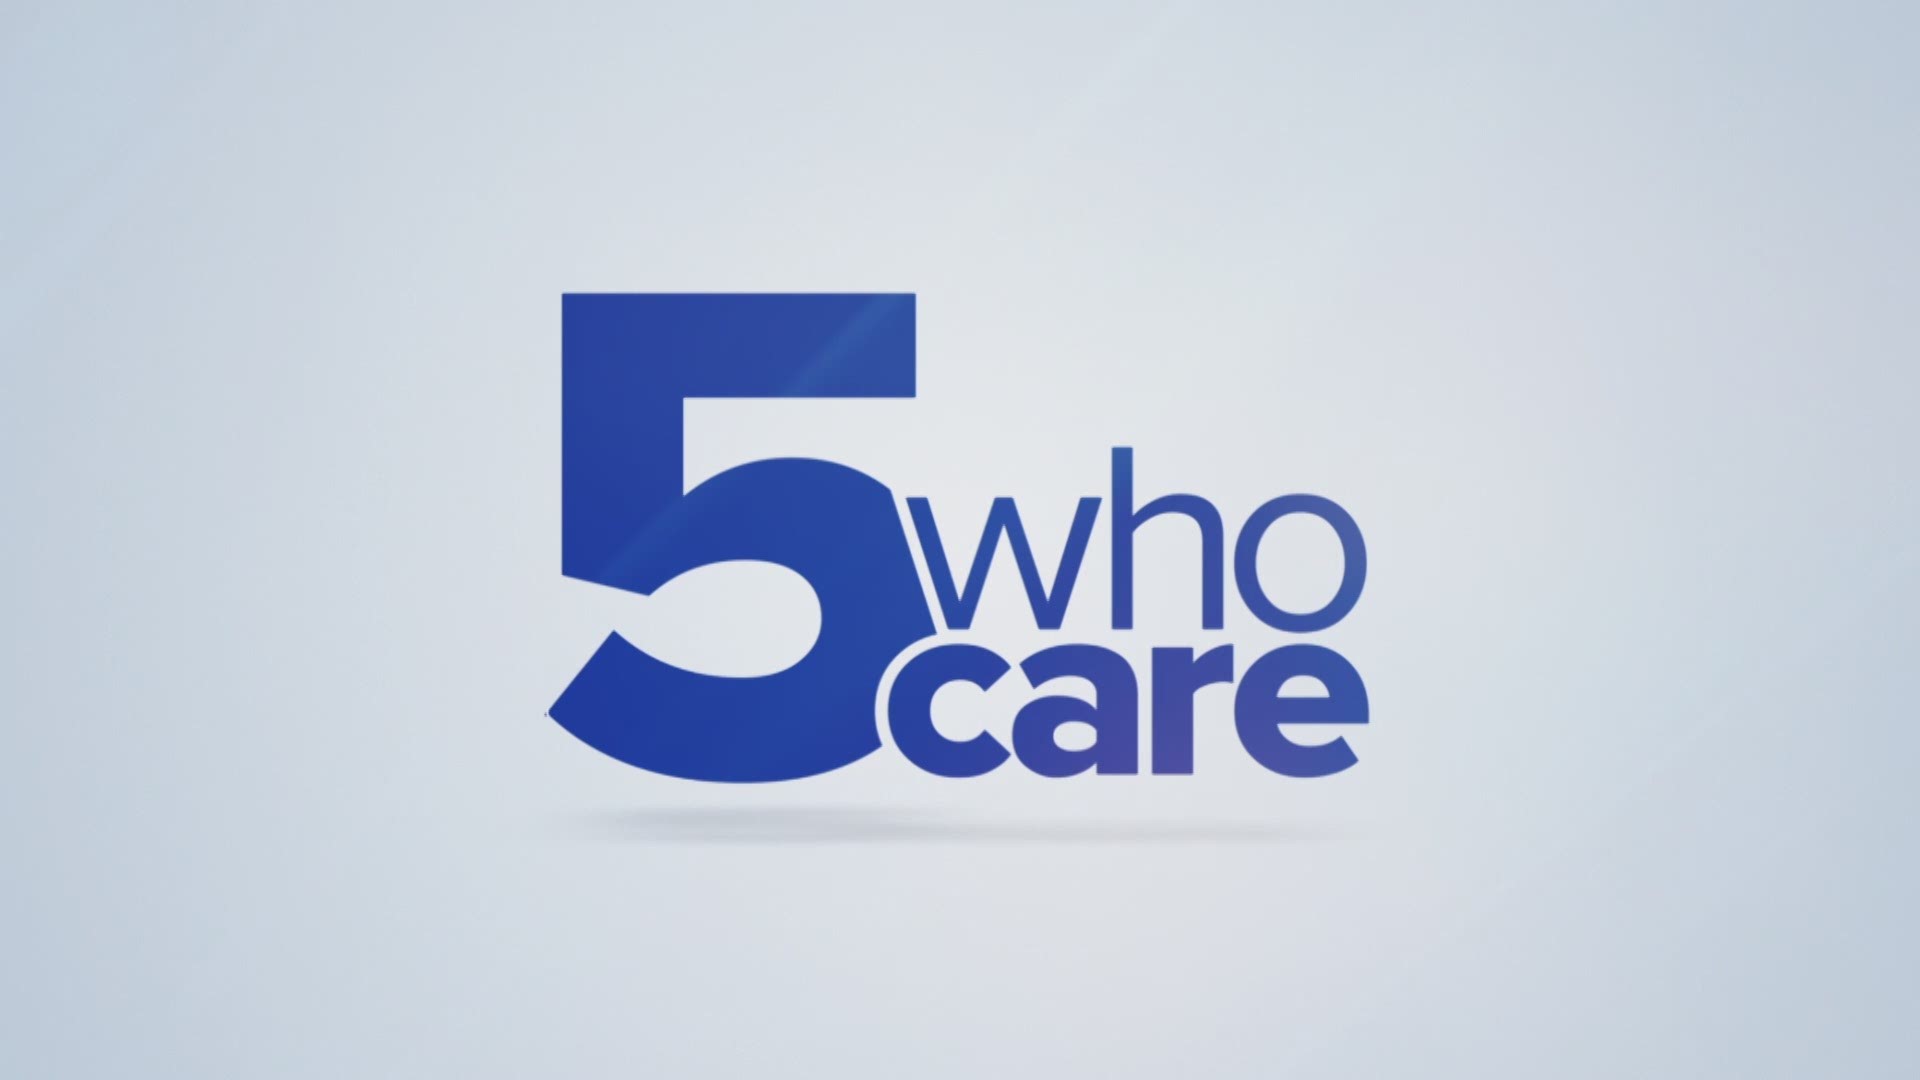 Meet Five Who Care winner Brenda Zimmerman.